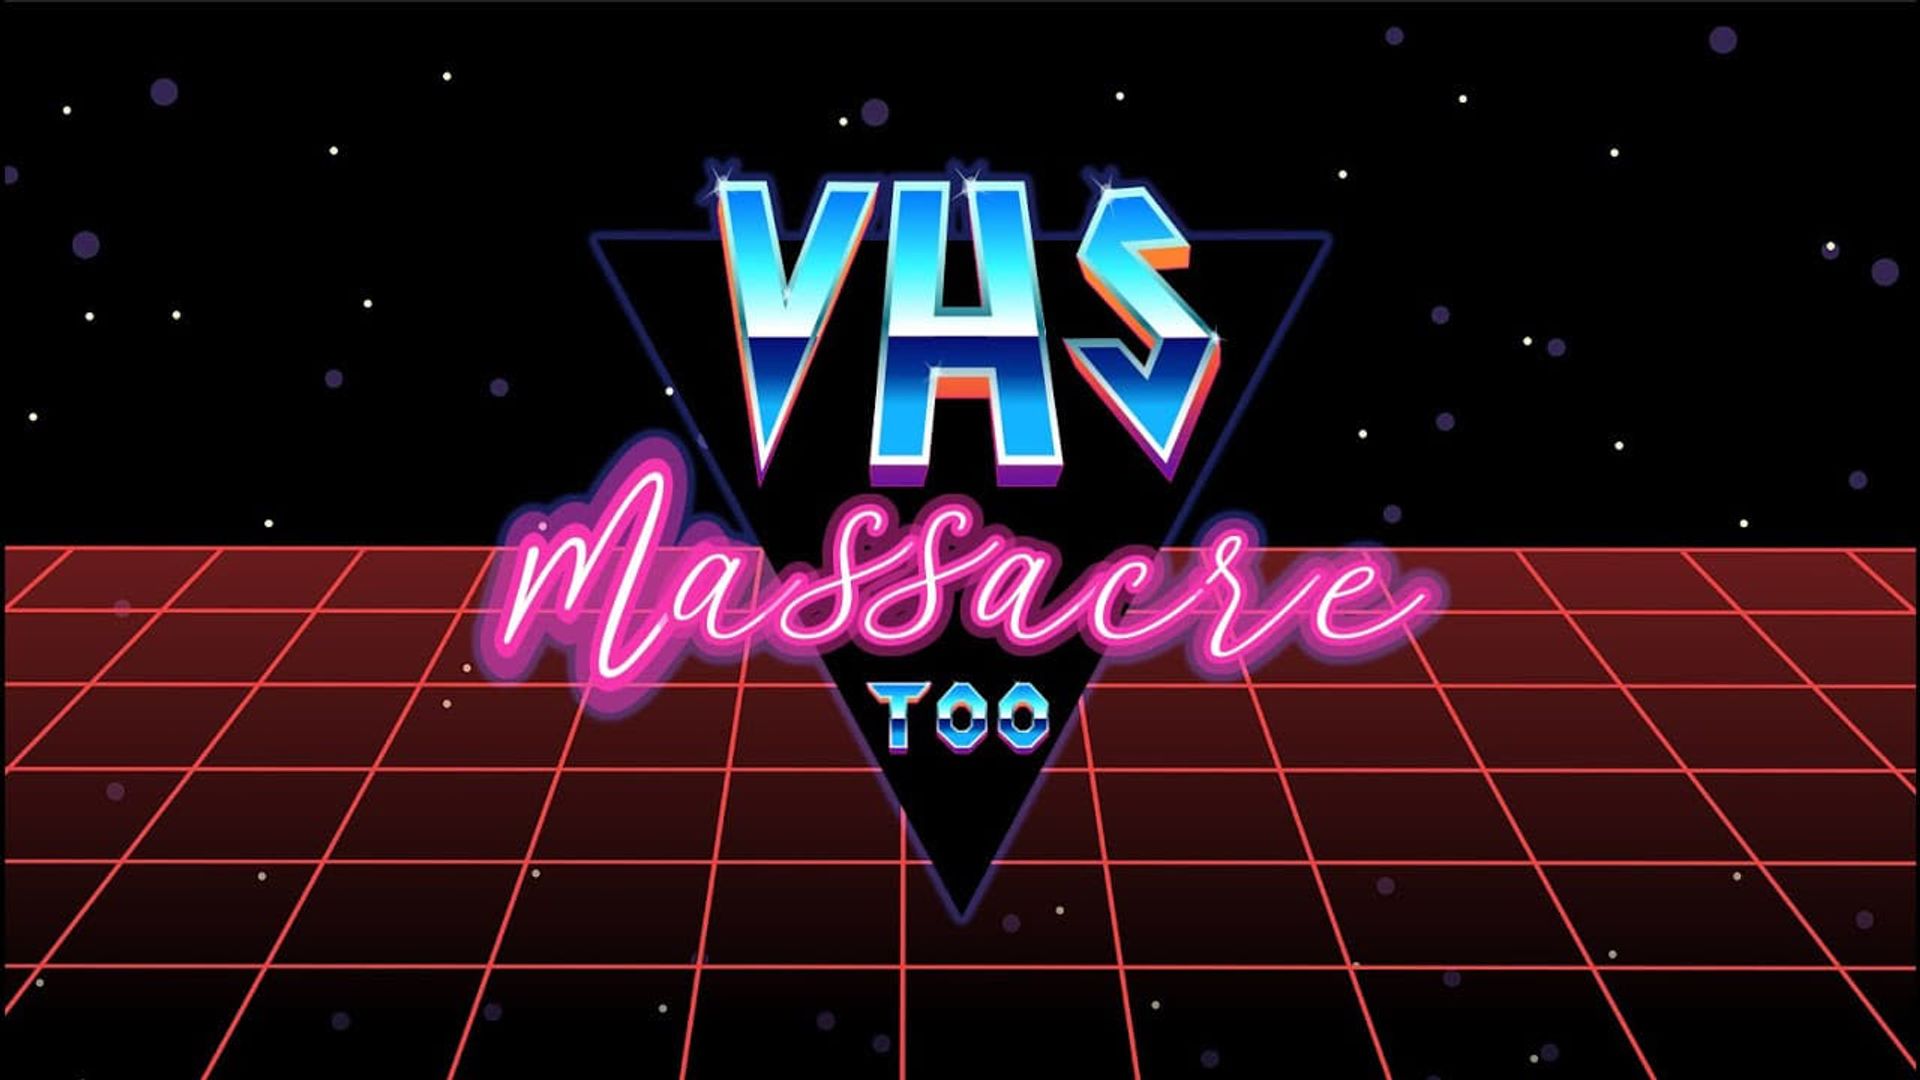 VHS Massacre 2 background